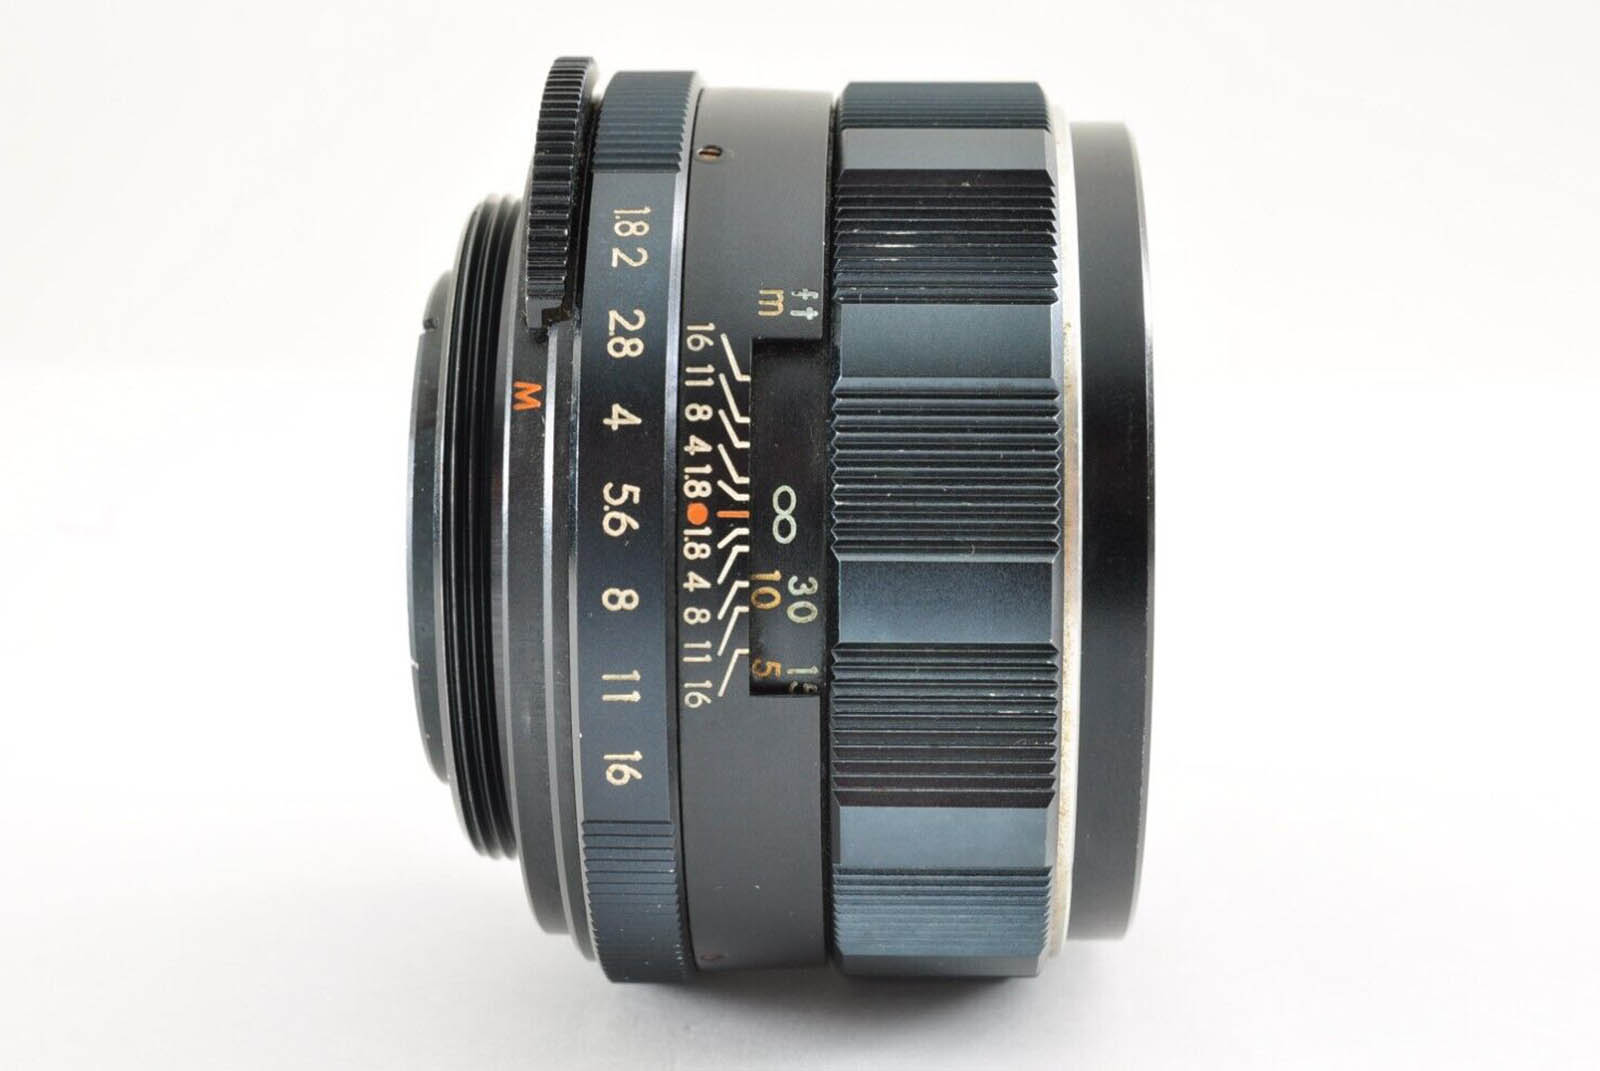 Auto-Takumar 1:1.8/55 ASAHI OPT. CO., Lens made in Japan (6/5, no 'R' mark, oblique lines of depth of field)